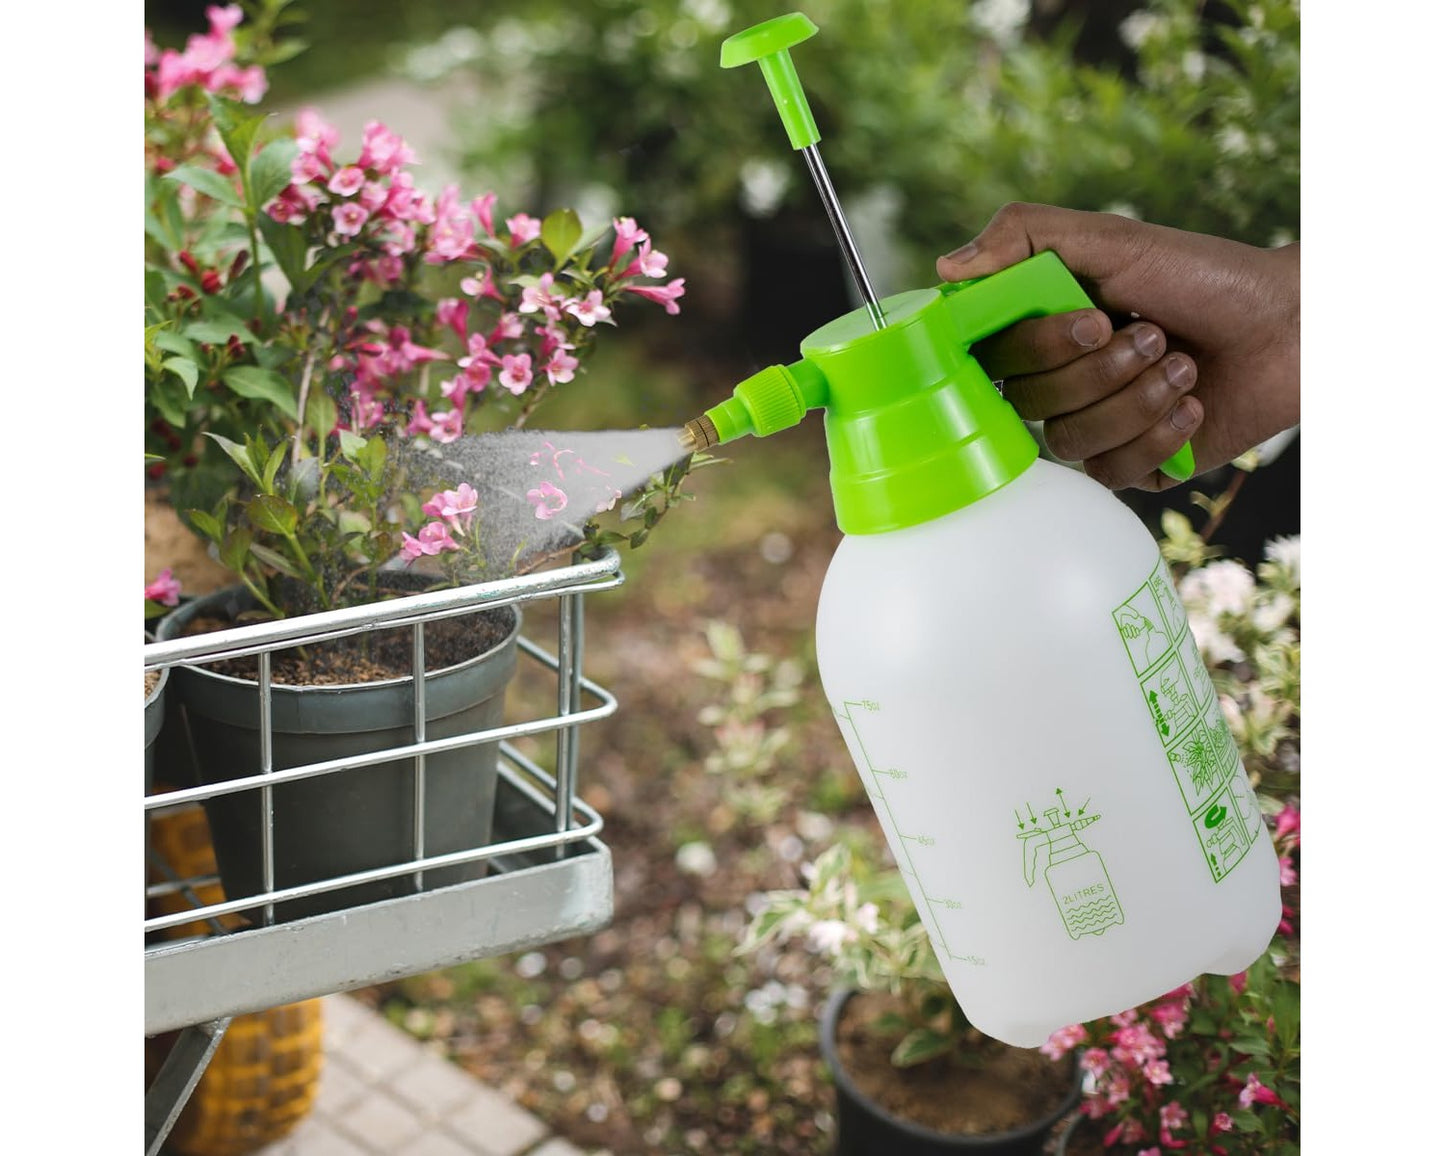 Spear 2L Water Sprayer: Garden Pump Pressure Sprayer with Ergonomic Design, Adjustable Spray Patterns, and Easy Refill for Plants, Car, Bike, and Home Garden